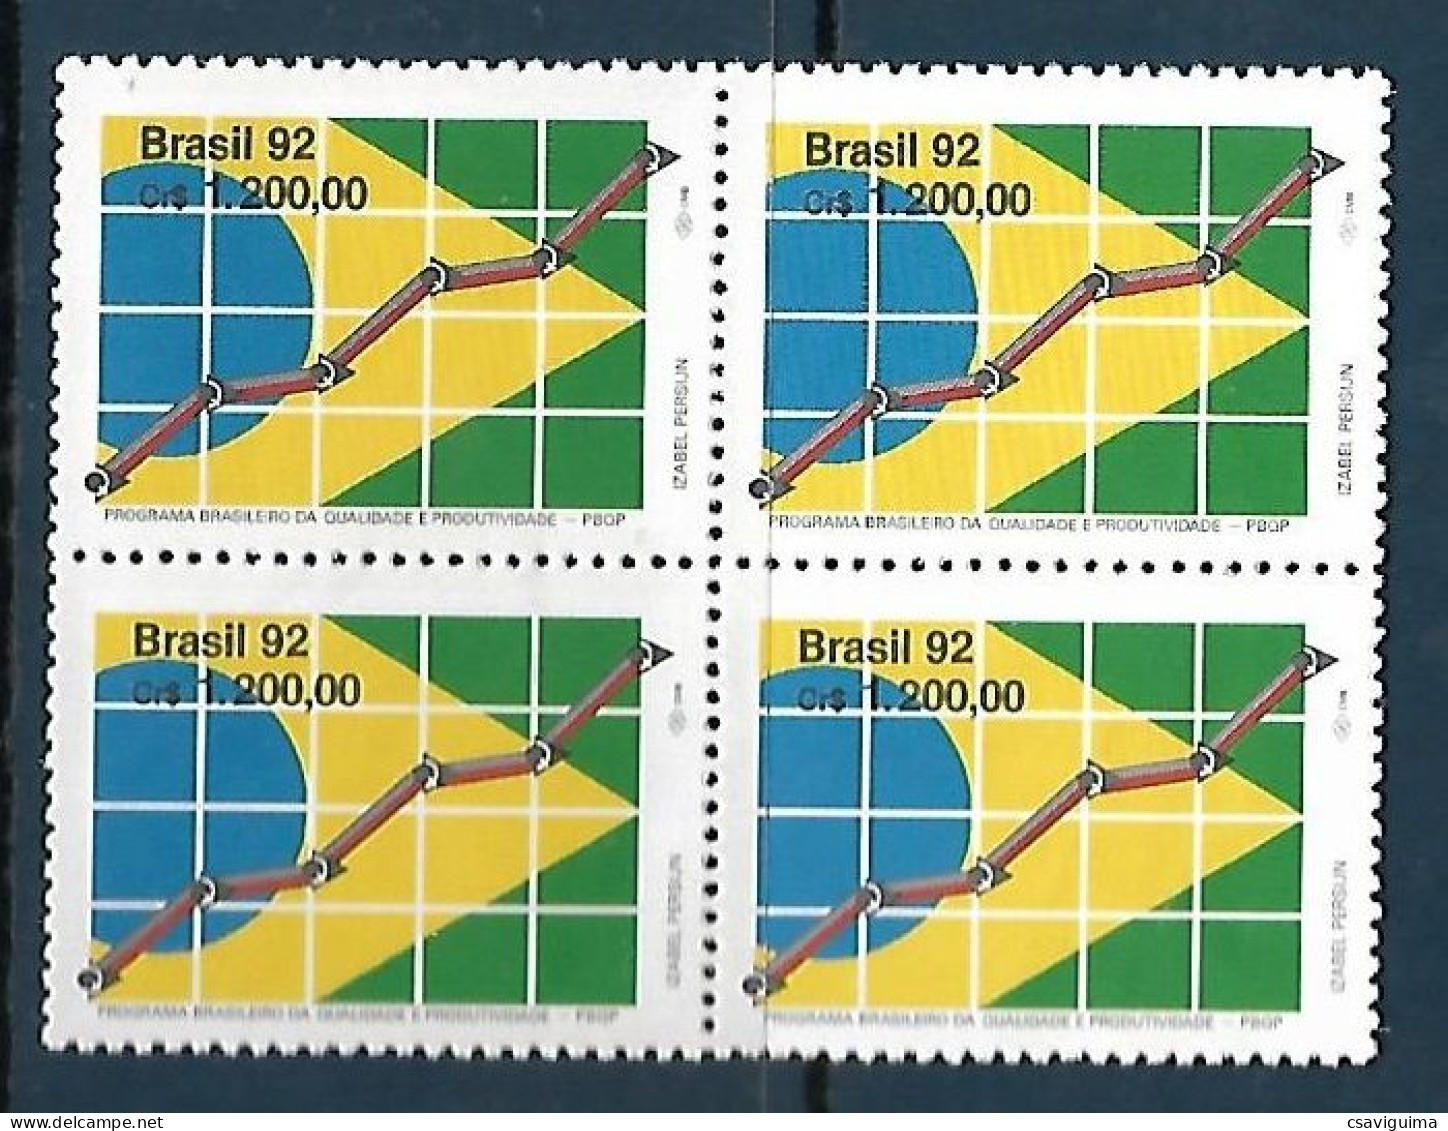 Brasil (Brazil) - 1992 - Block Of 4: Brazilian Program For Quality & Productivity - Yv 2102 - Usines & Industries